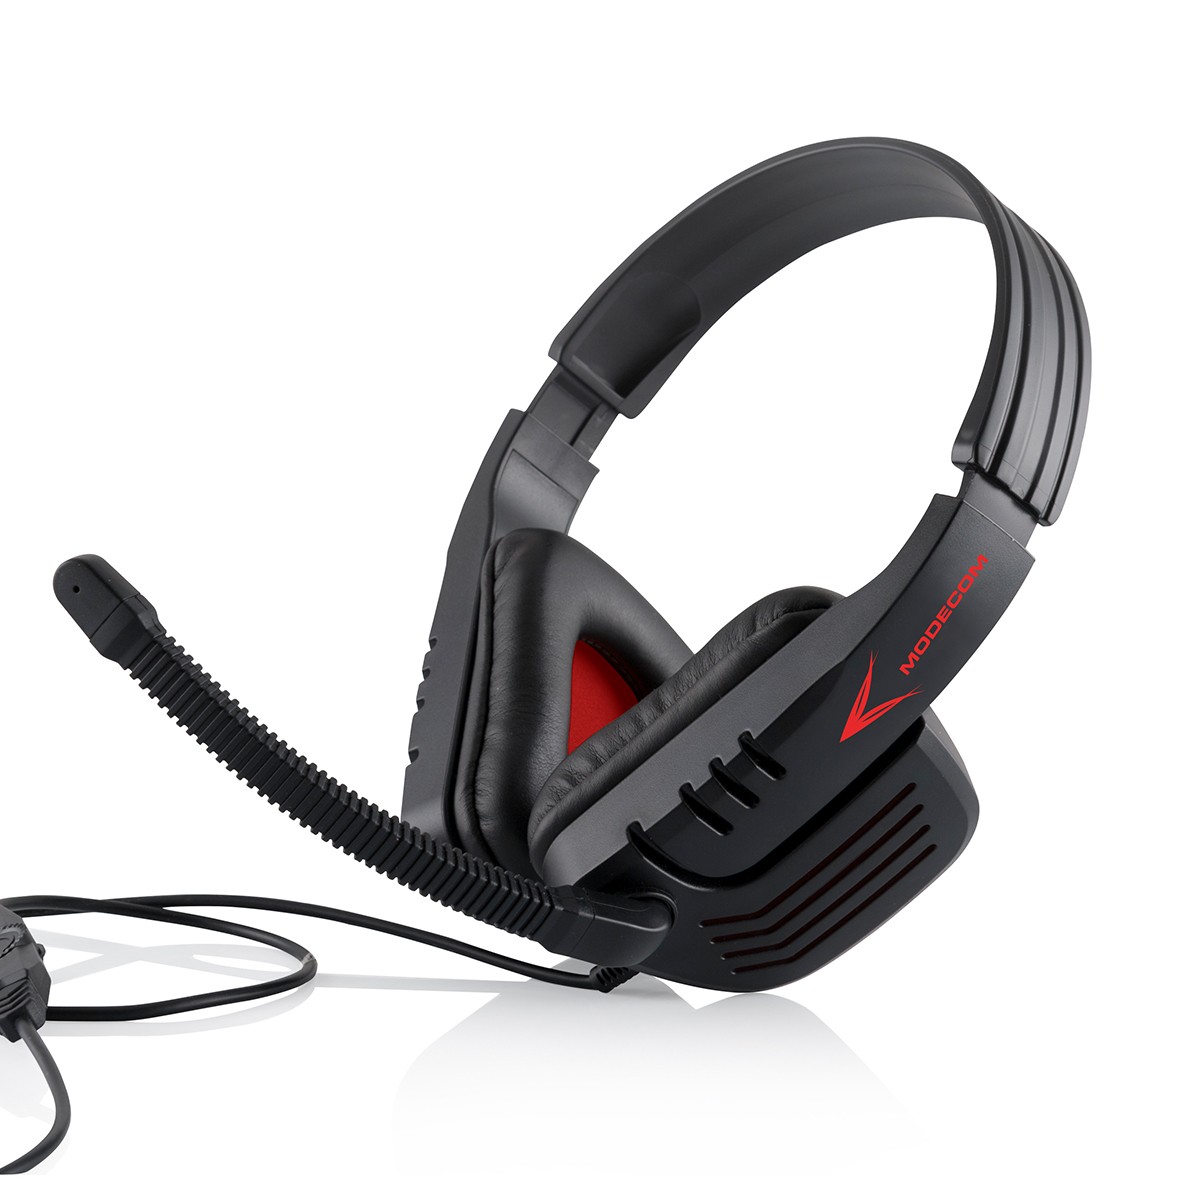 MODECOM RANGER MC-823 Black/Red gamers headphones